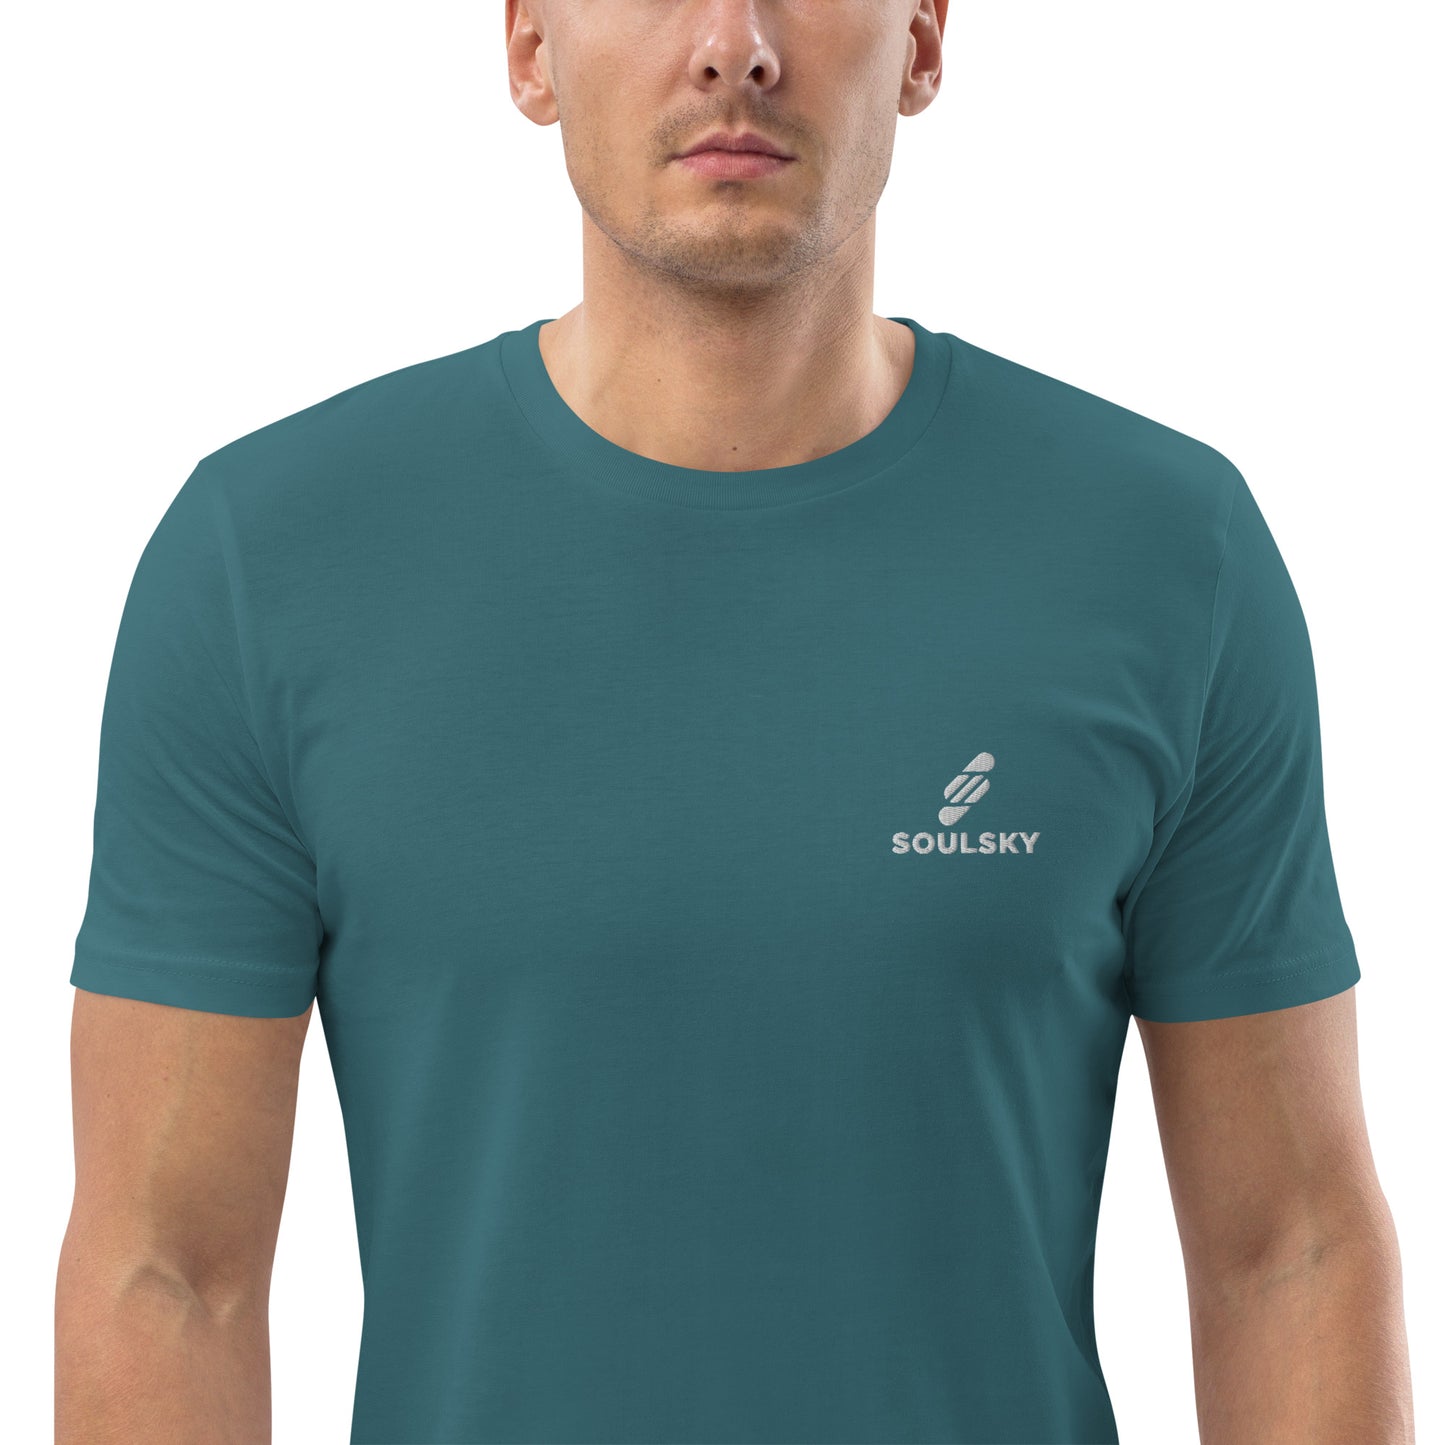 SOULSKY Logo Unisex Crewneck T-shirt - Teal